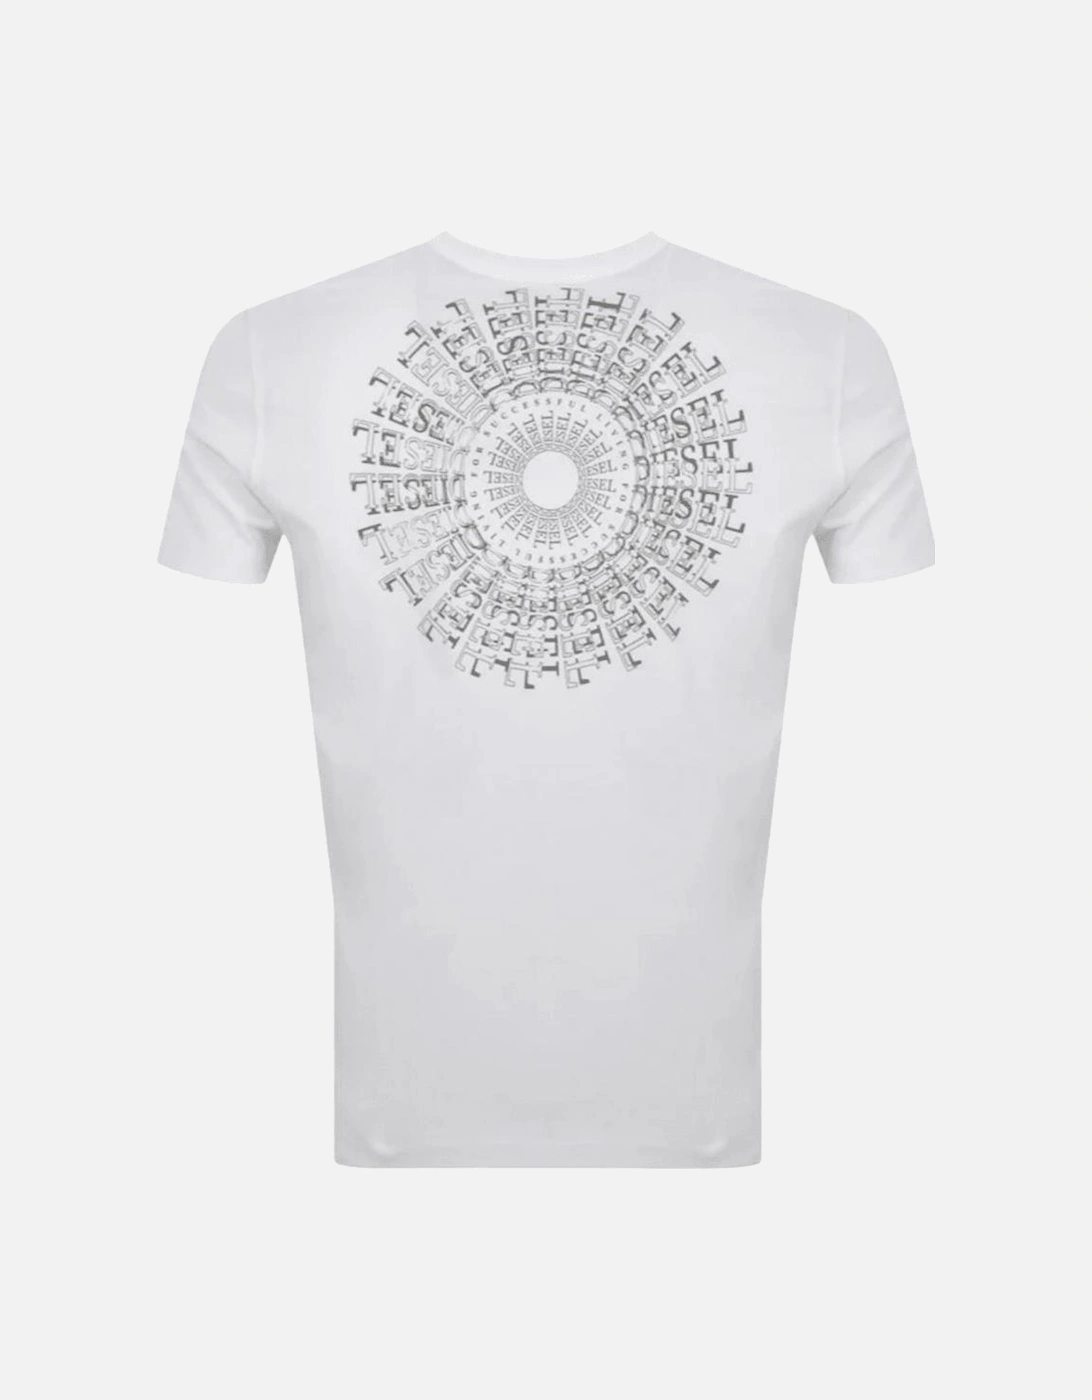 T-DIEGOR-K71 Graphic Ring Logo White T-Shirt